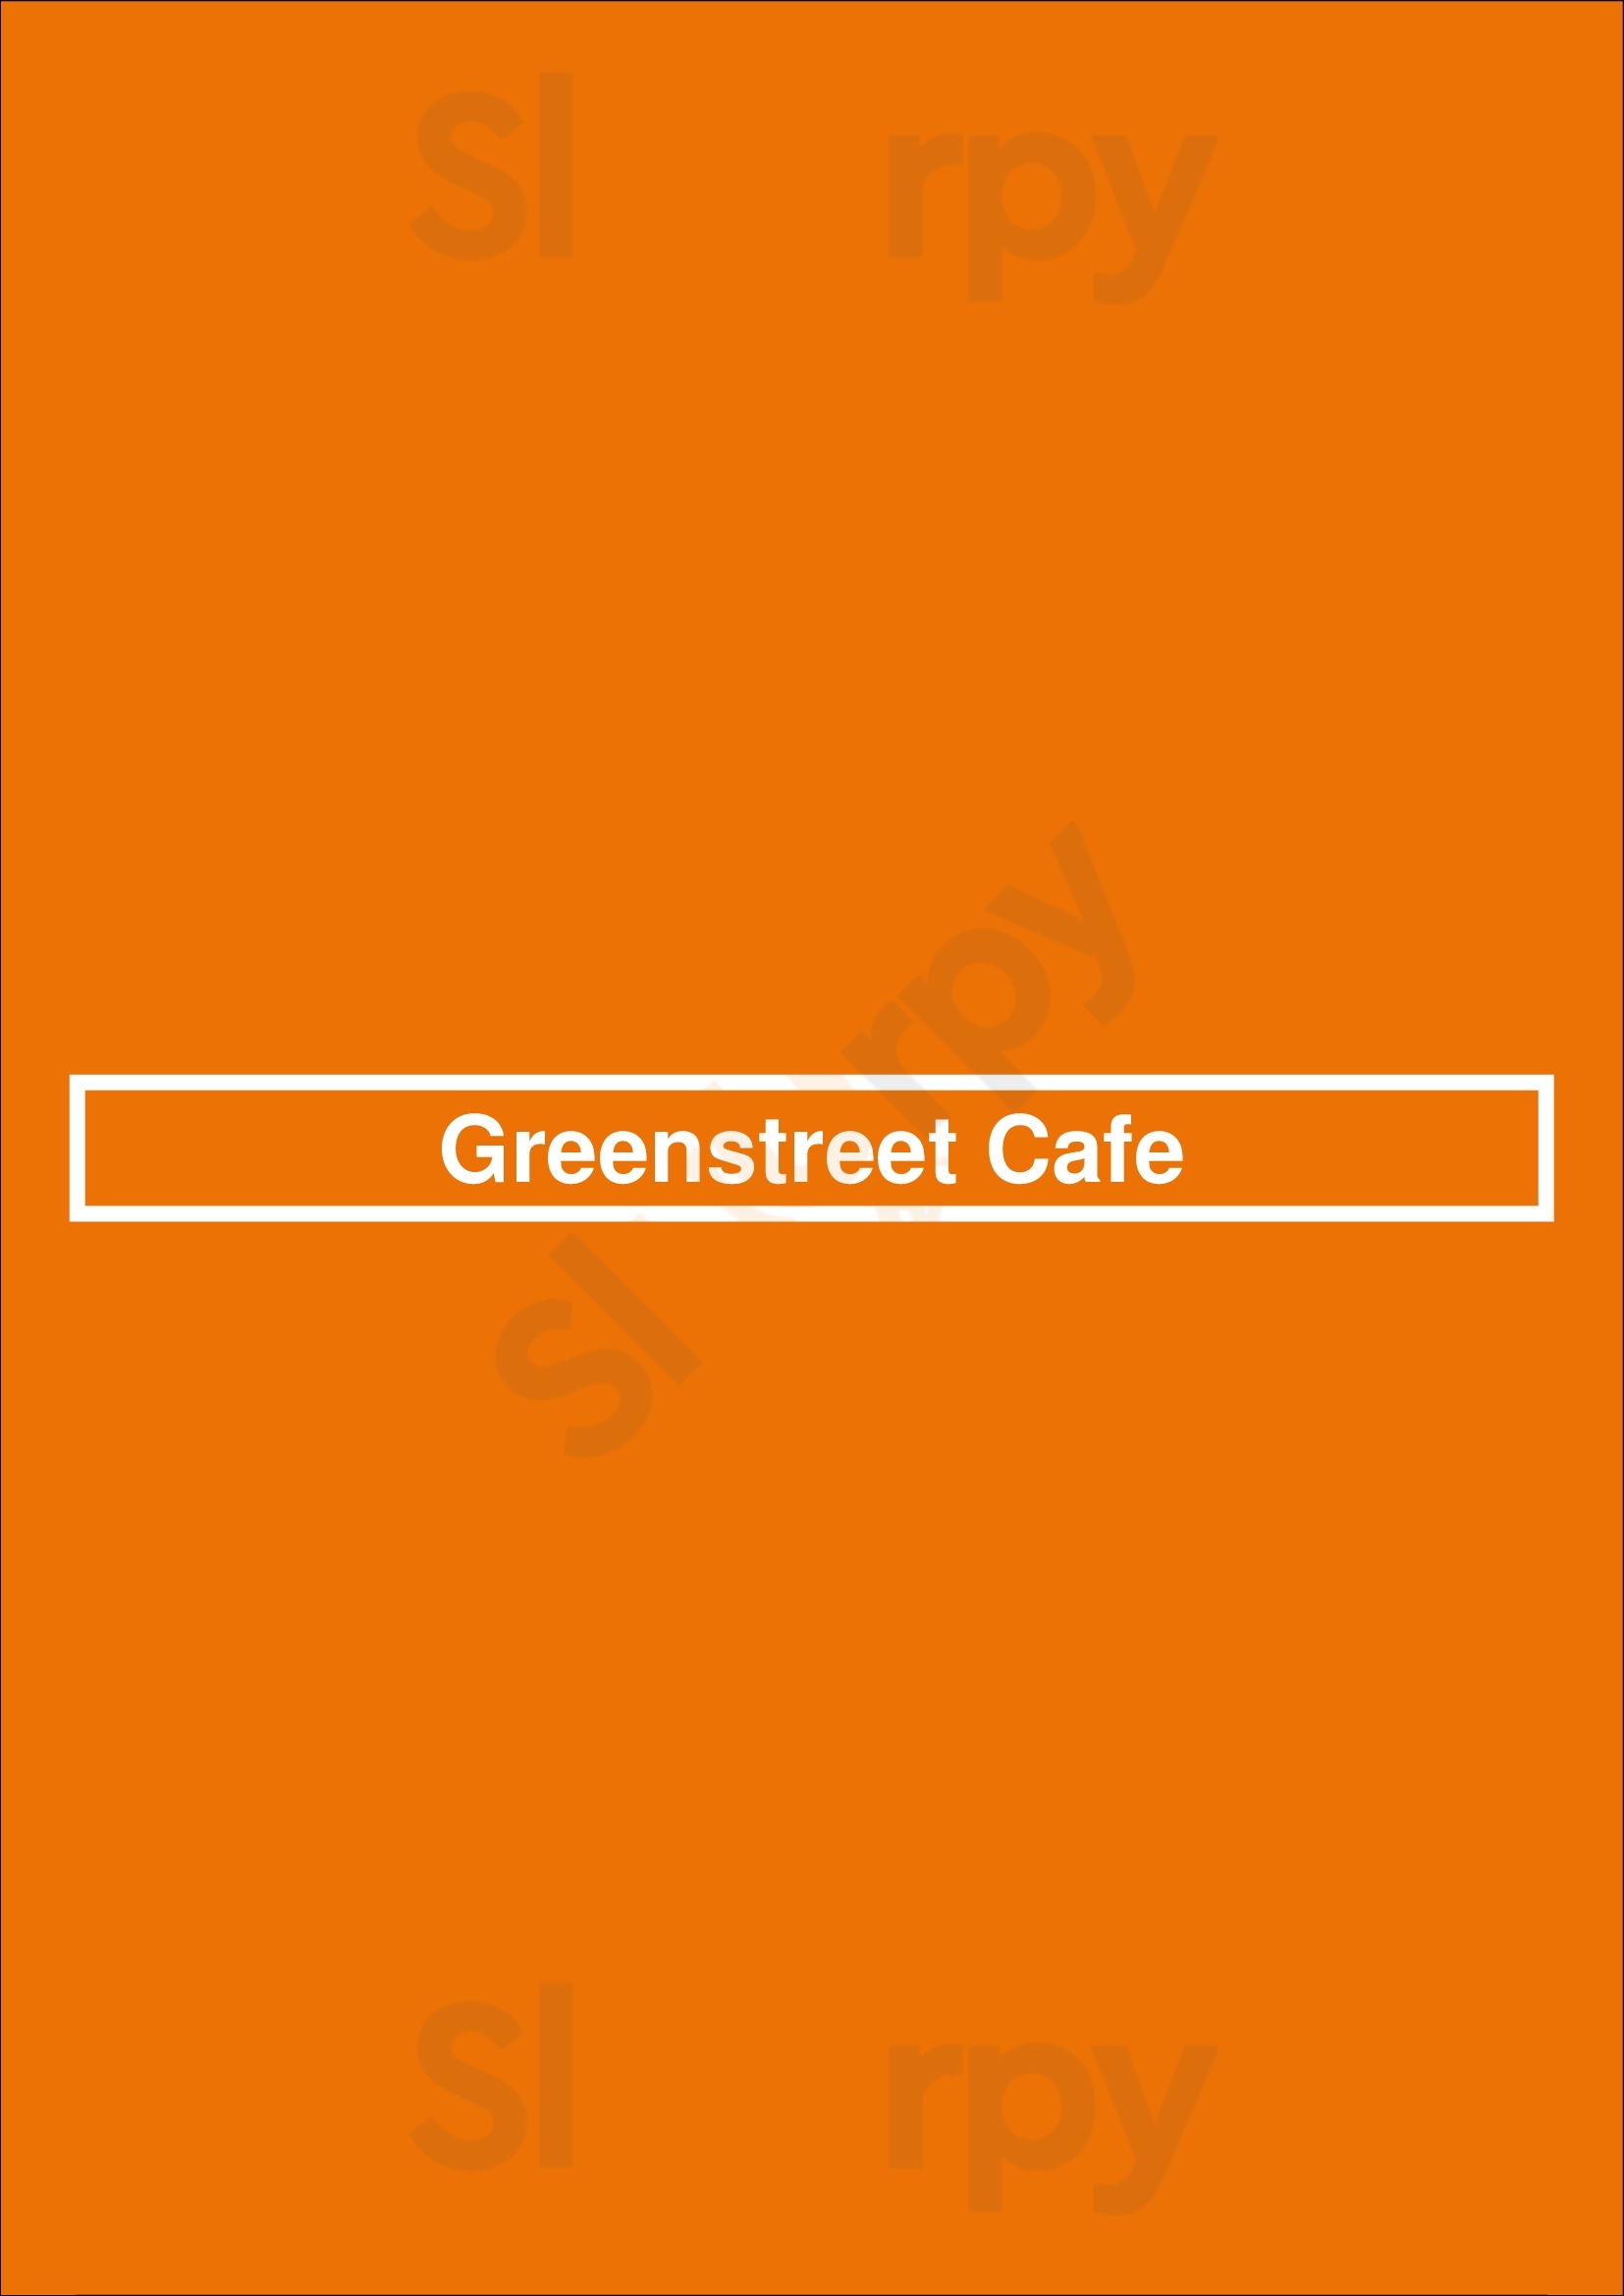 Greenstreet Cafe Miami Menu - 1